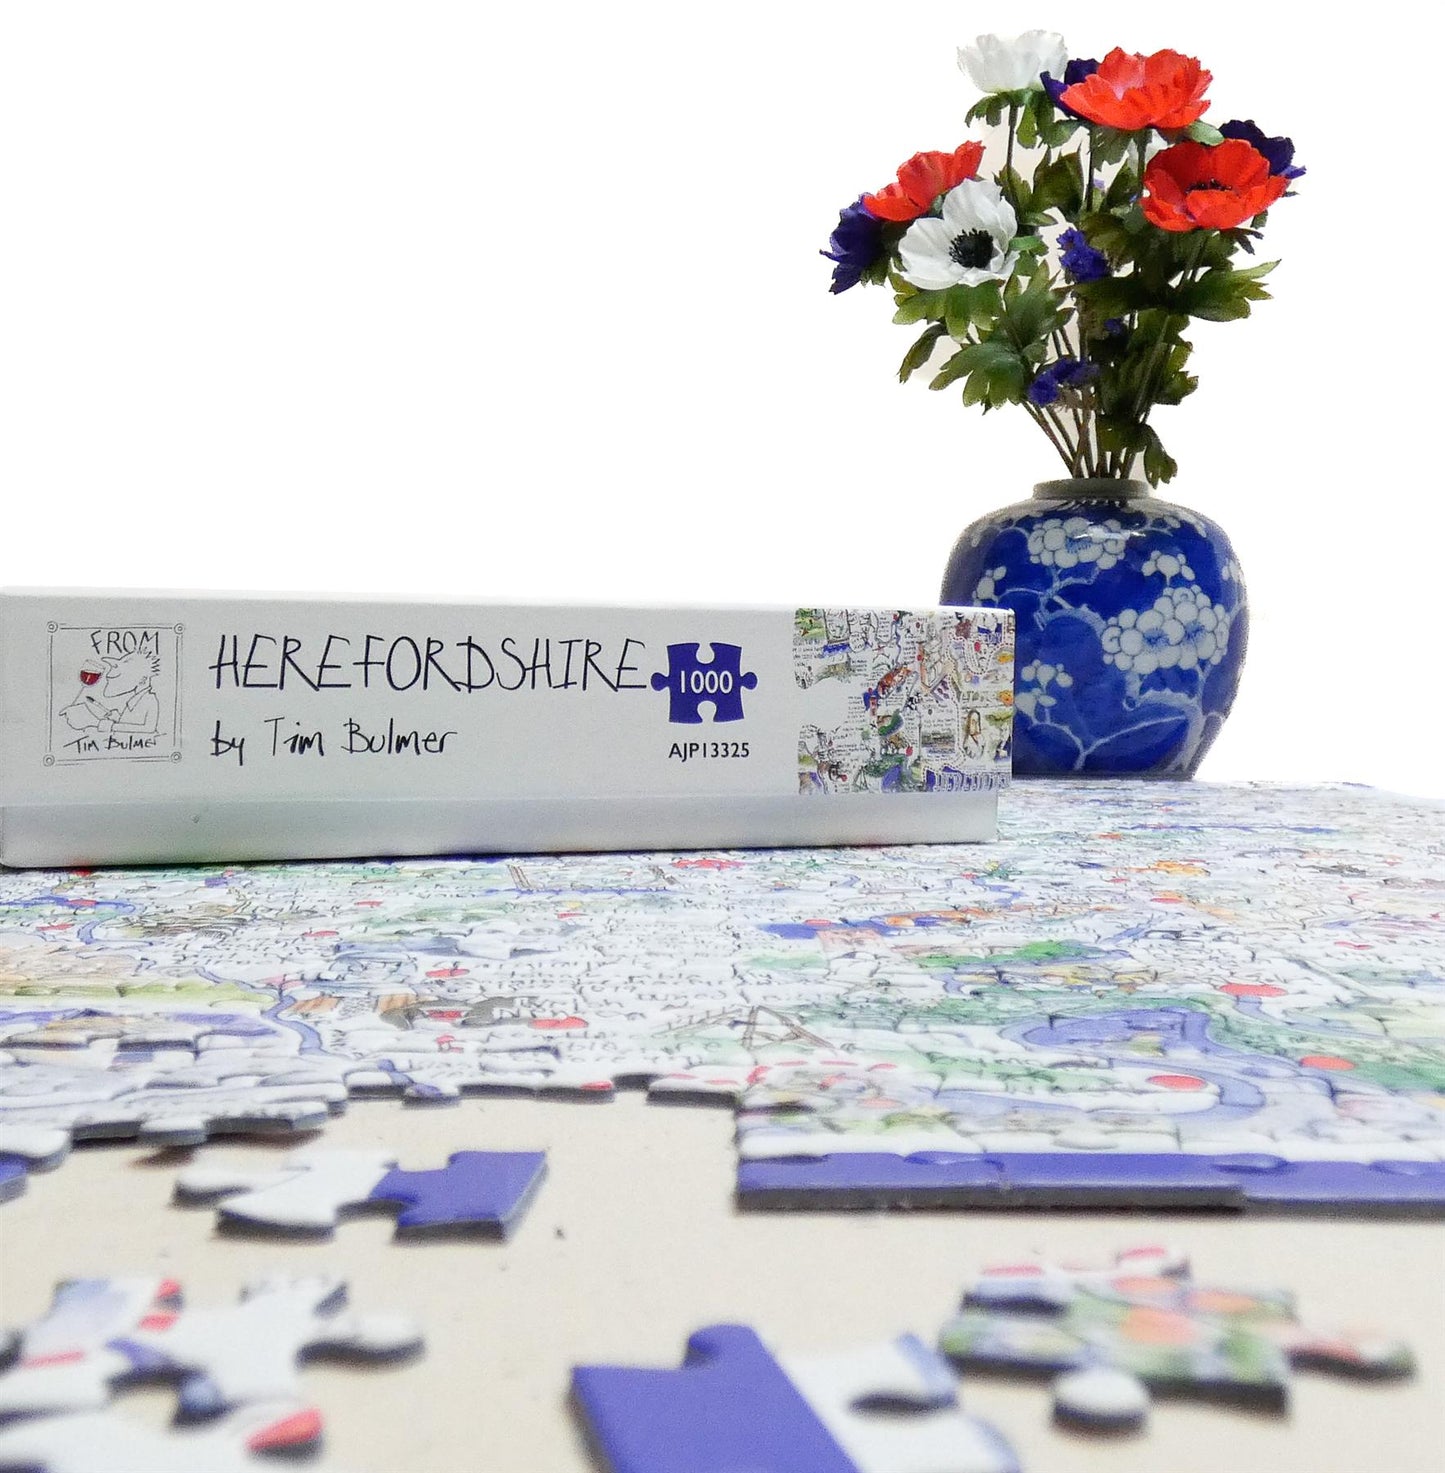 Herefordshire- Tim Bulmer 1000 piece Jigsaw